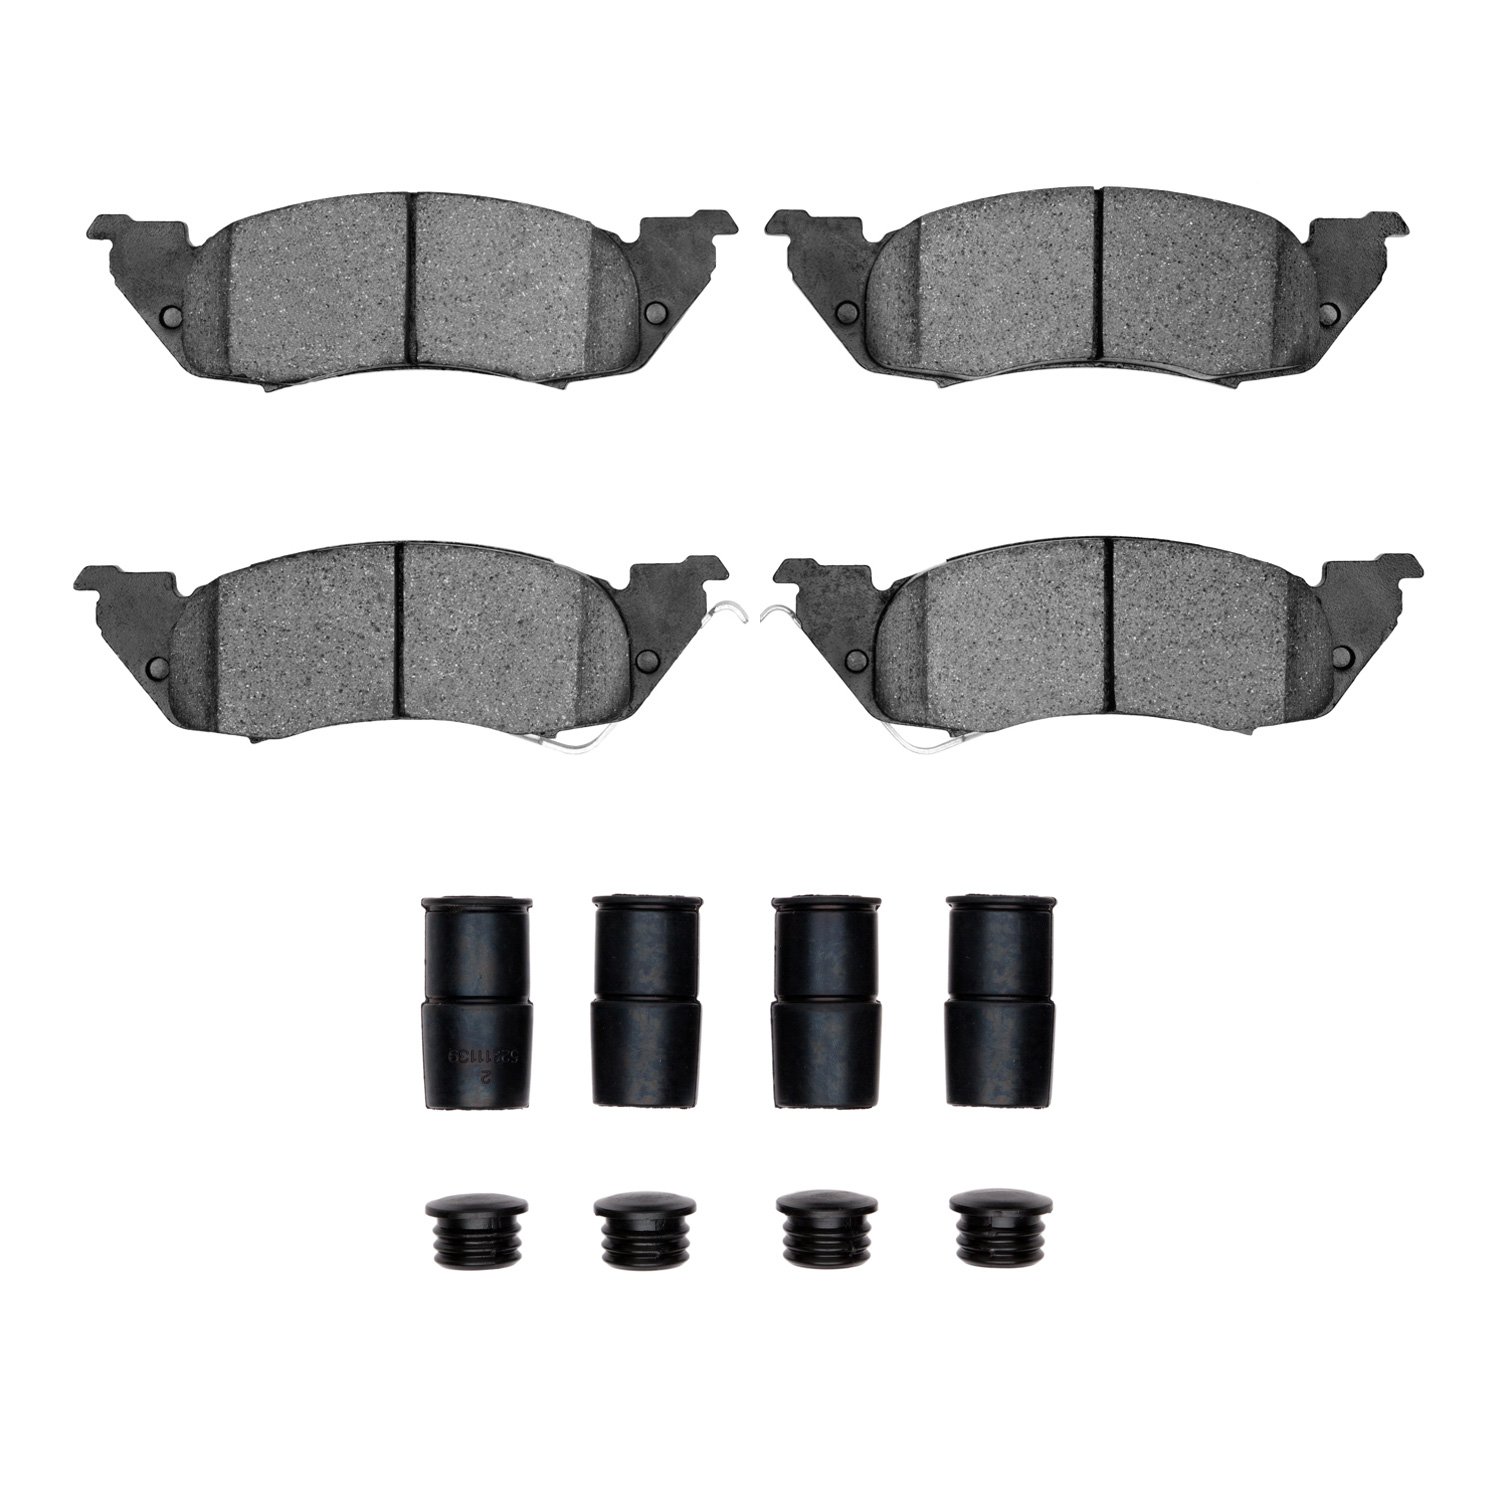 1551-0529-01 5000 Advanced Low-Metallic Brake Pads & Hardware Kit, 1991-1998 Mopar, Position: Front